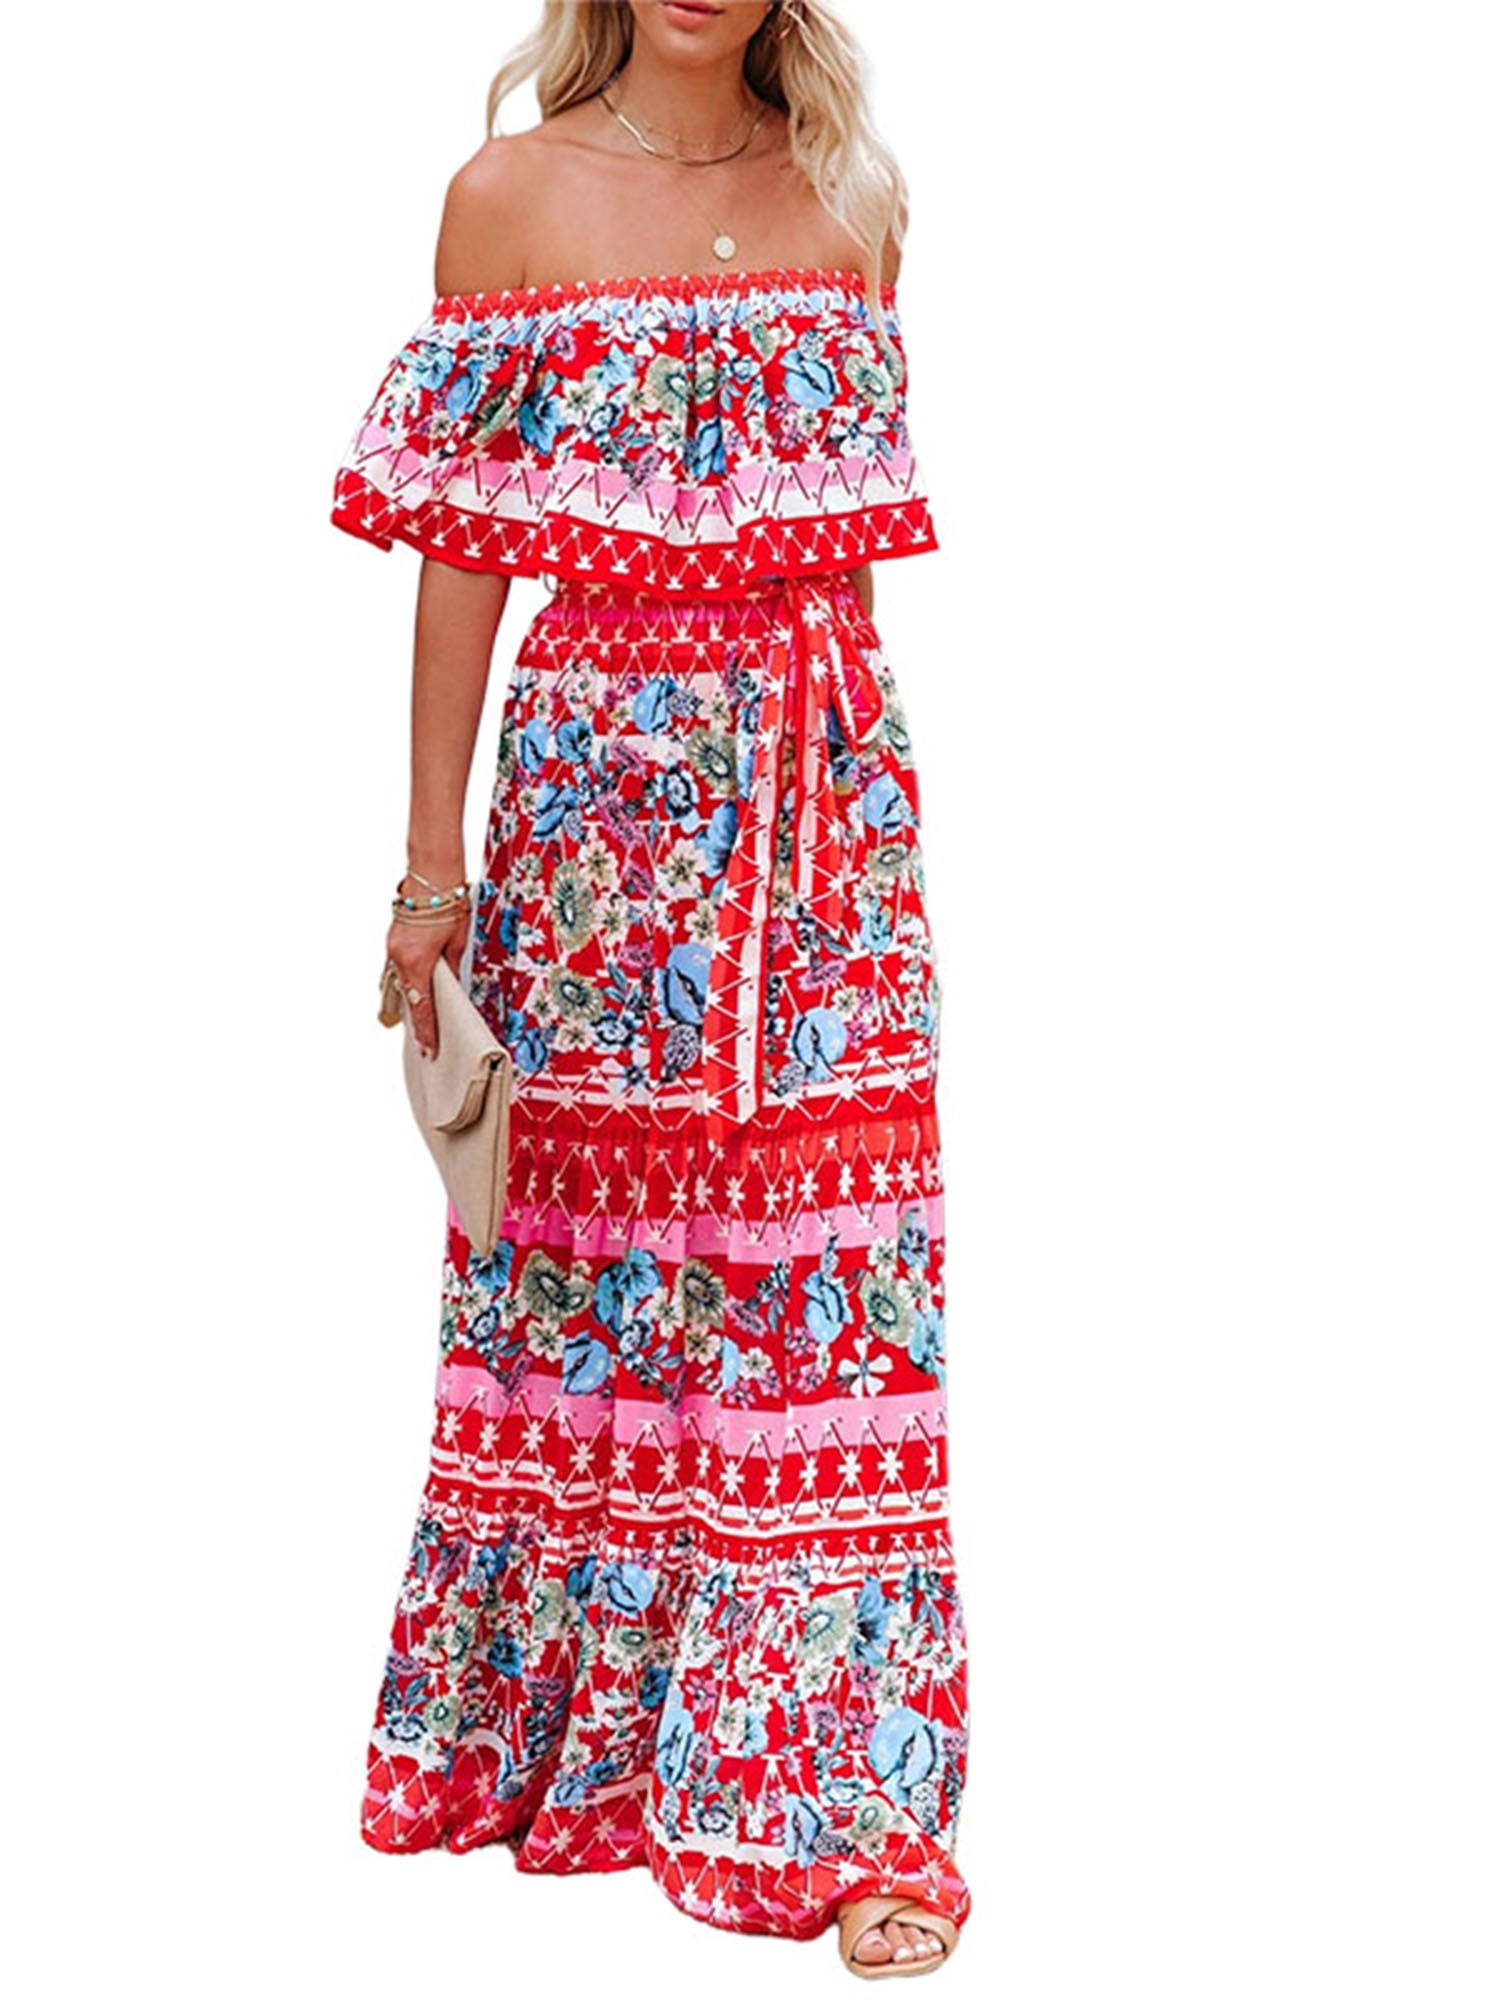 Lumento Summer Sun Dress for Womens Floral Printed Hawaiian Beach Dress